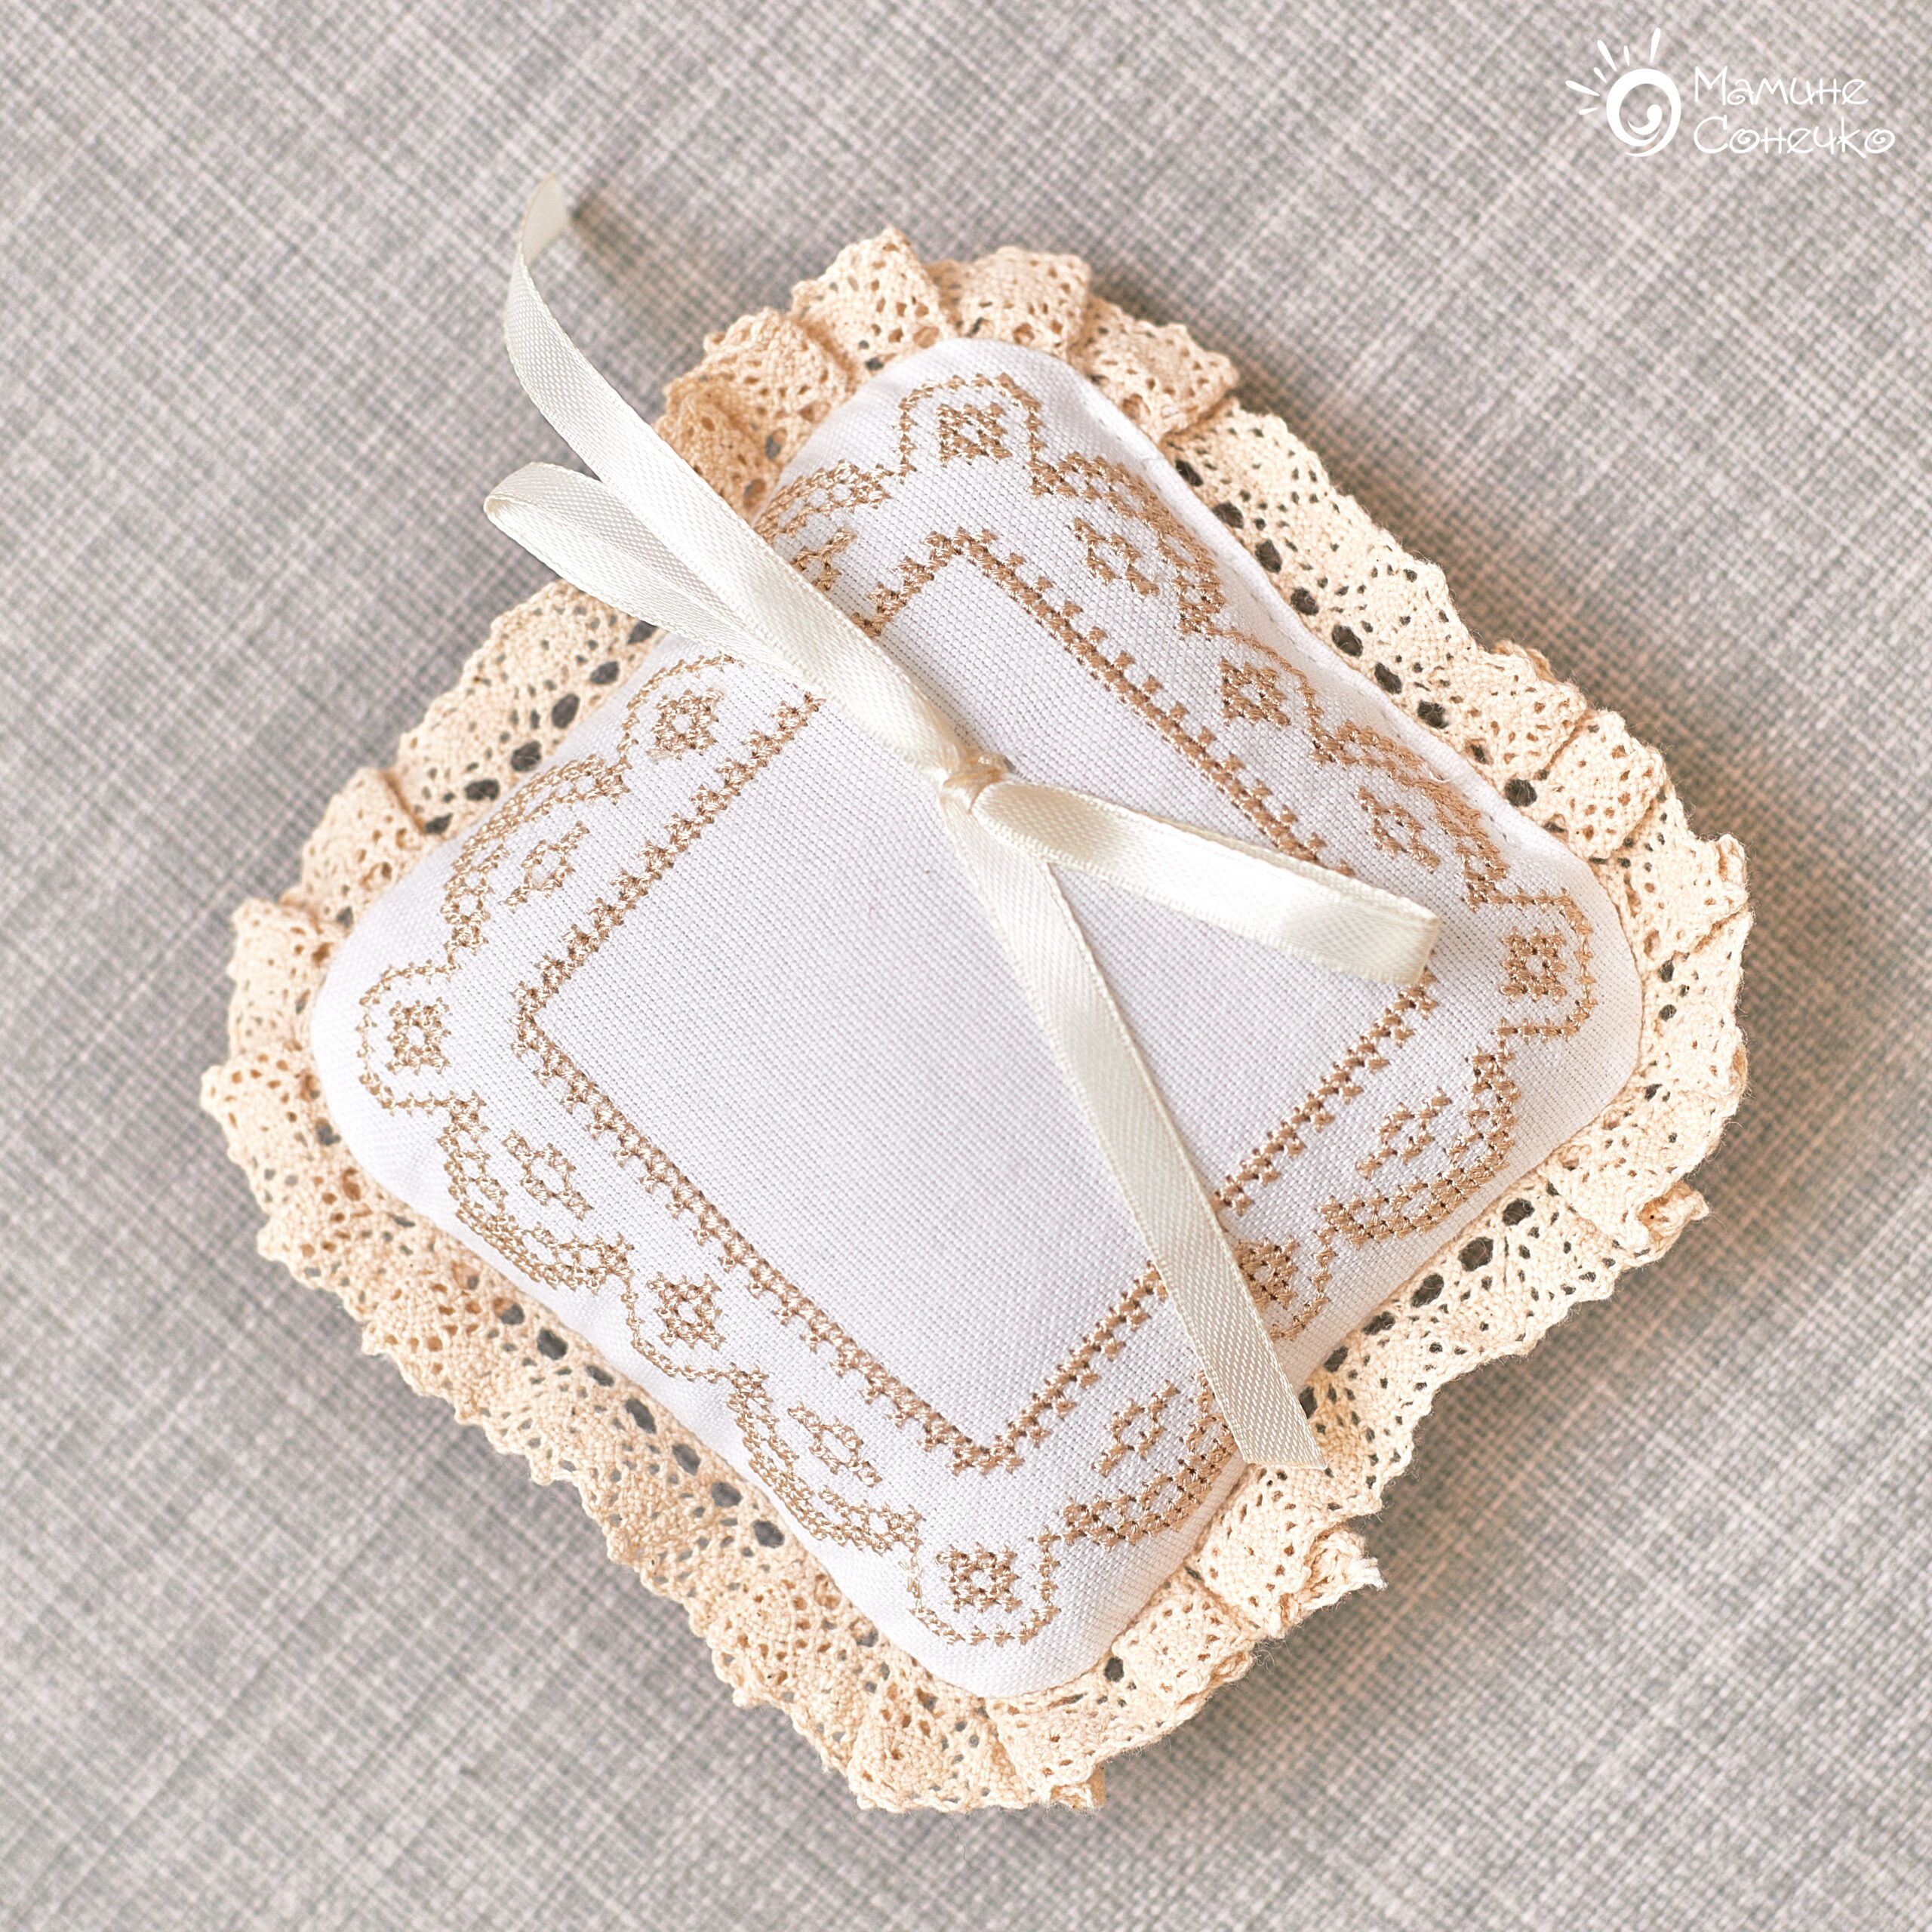 Cross stitch cushion “Monochrome” beige, ivory linen